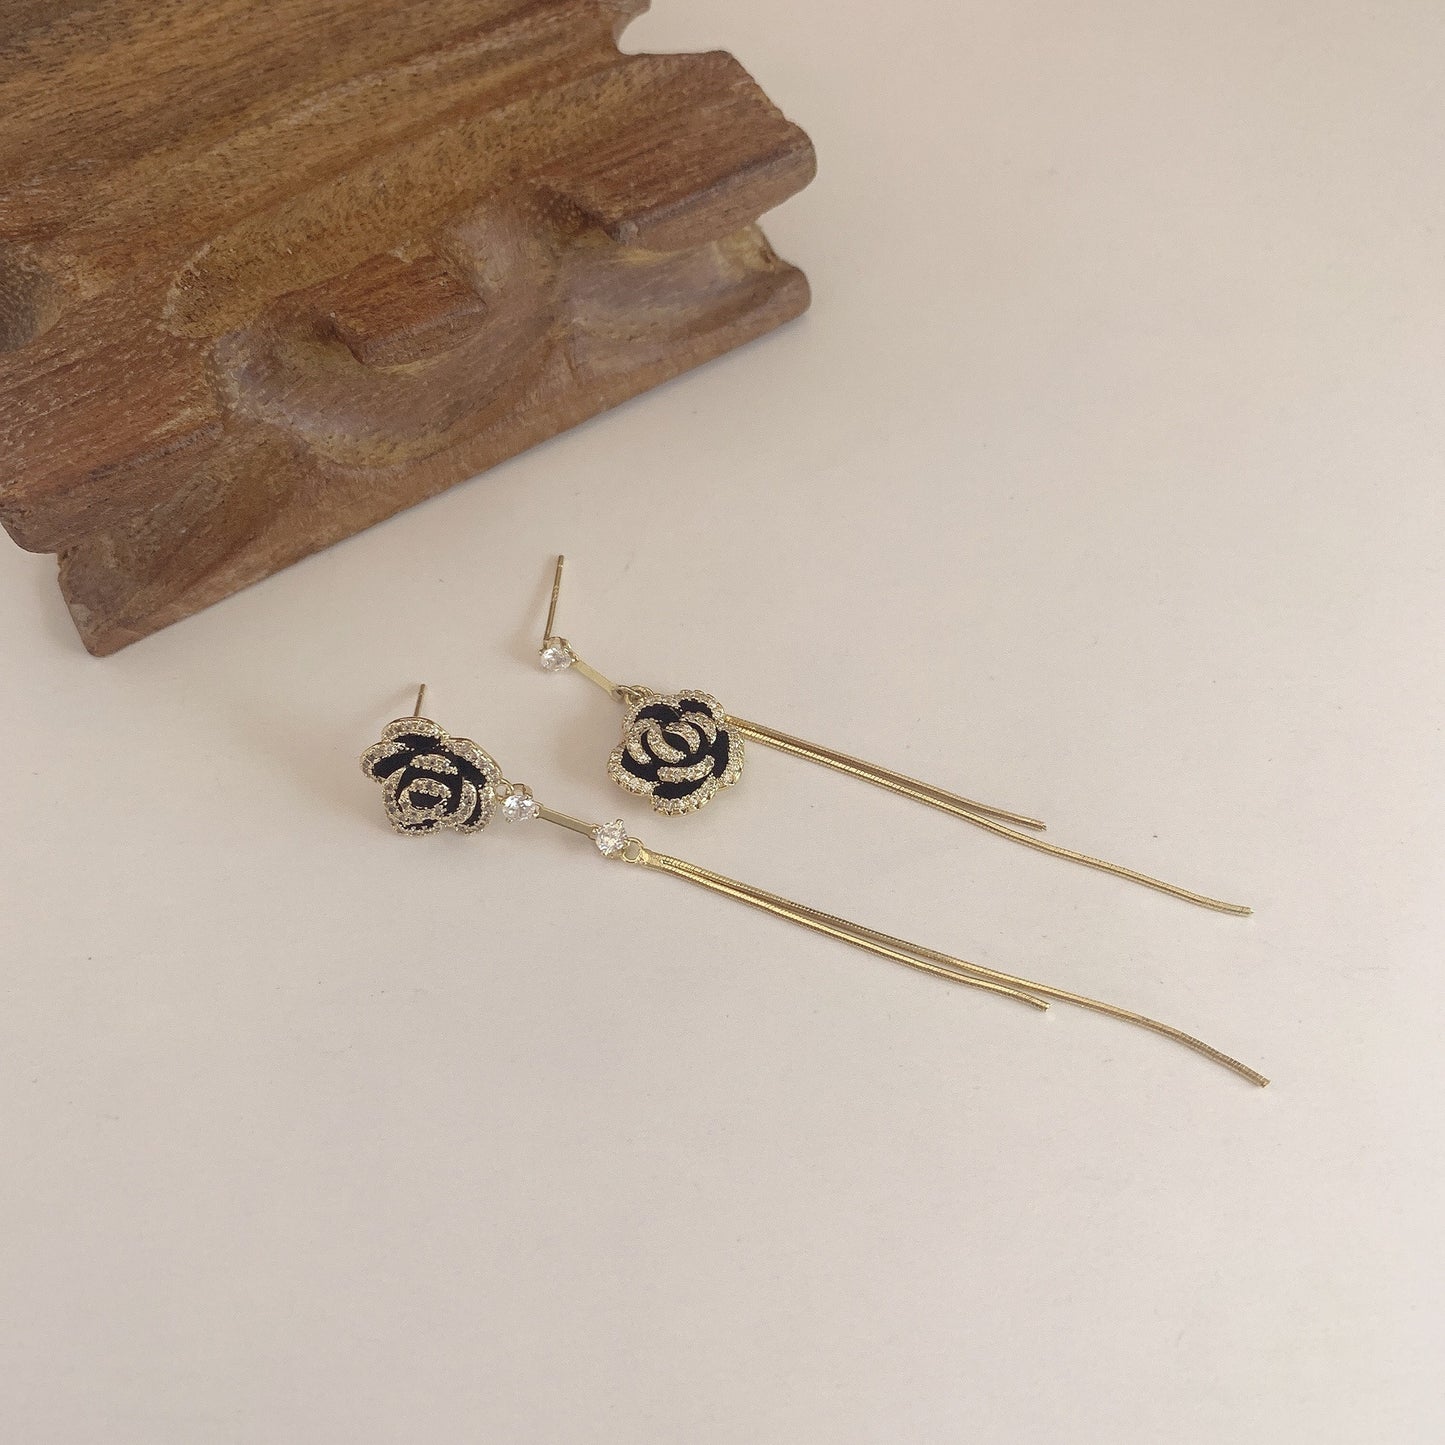 Black rose tassel earrings with micro inlaid zircon stone design, super immortal earrings, temperament, versatile earrings